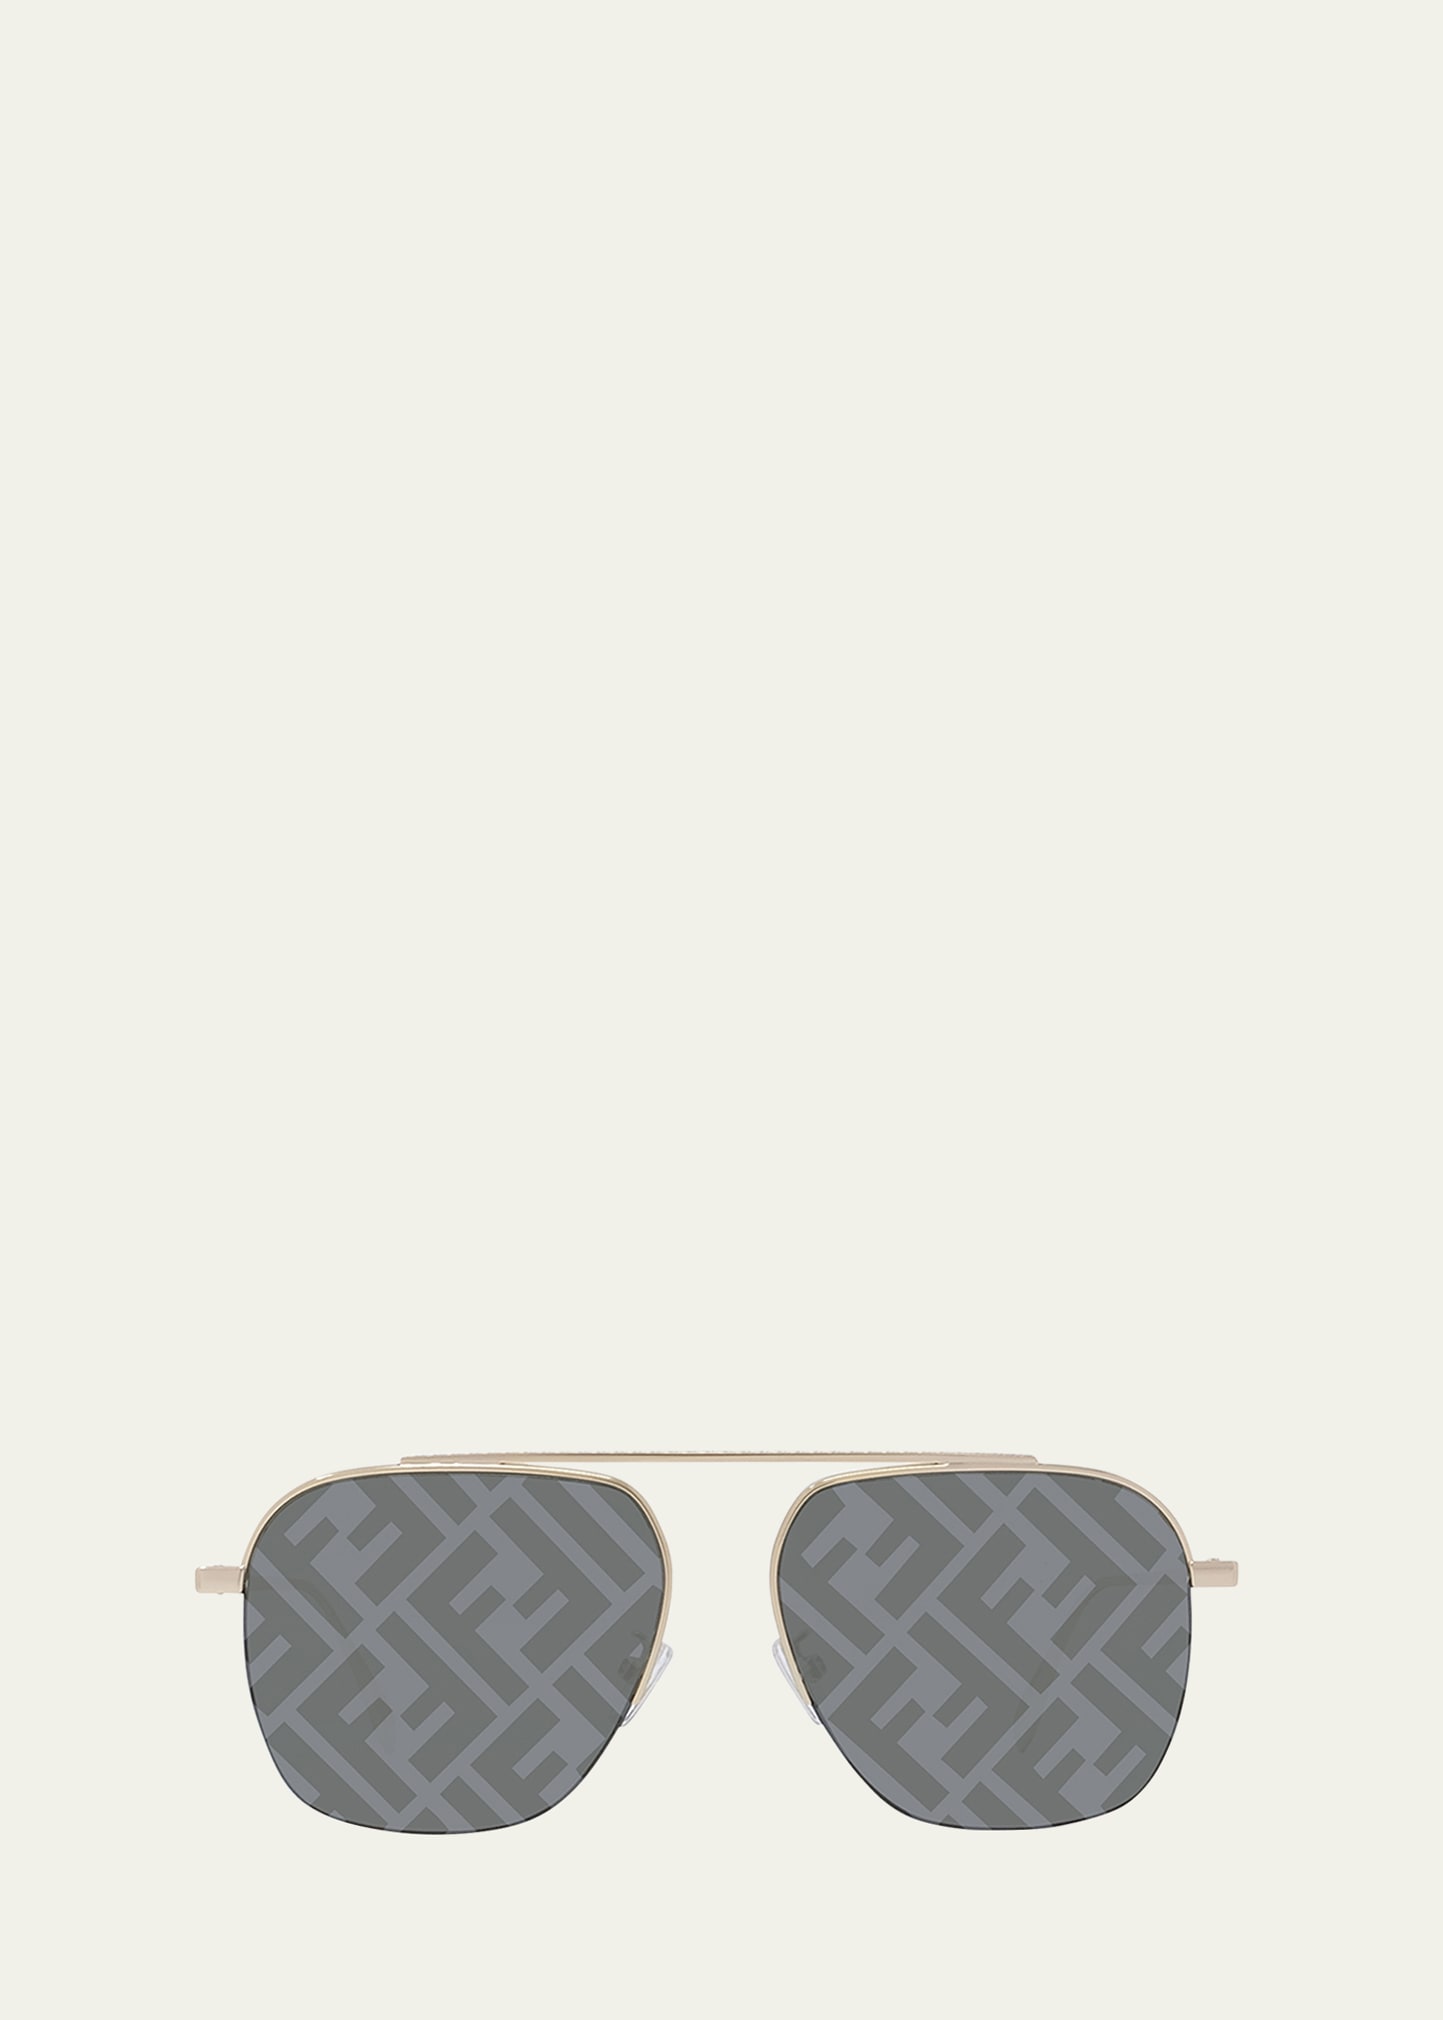 Fendi Men's  Travel Ff-logo Metal Aviator Sunglasses In Gldo/smkmr